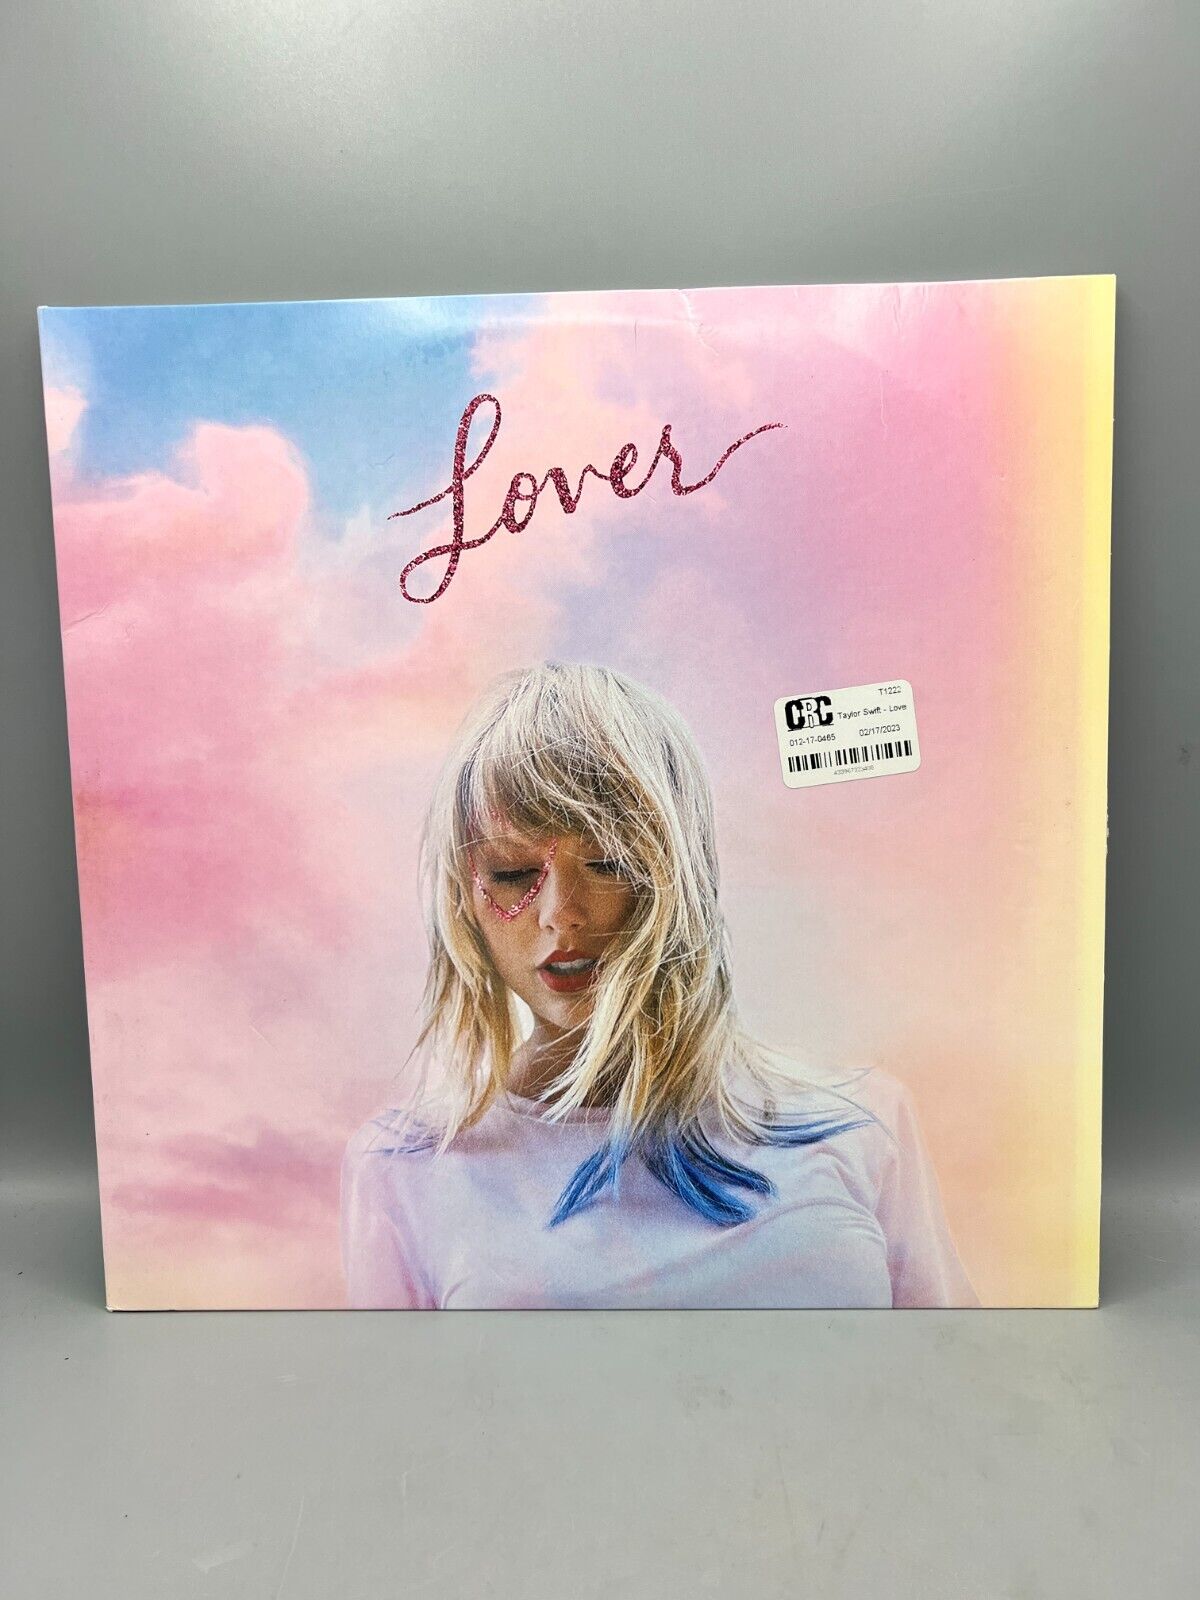 Taylor Swift Lover 2 LP Blue & Pink Vinyl Gatefold Cover Photos Lyrics EX *READ*